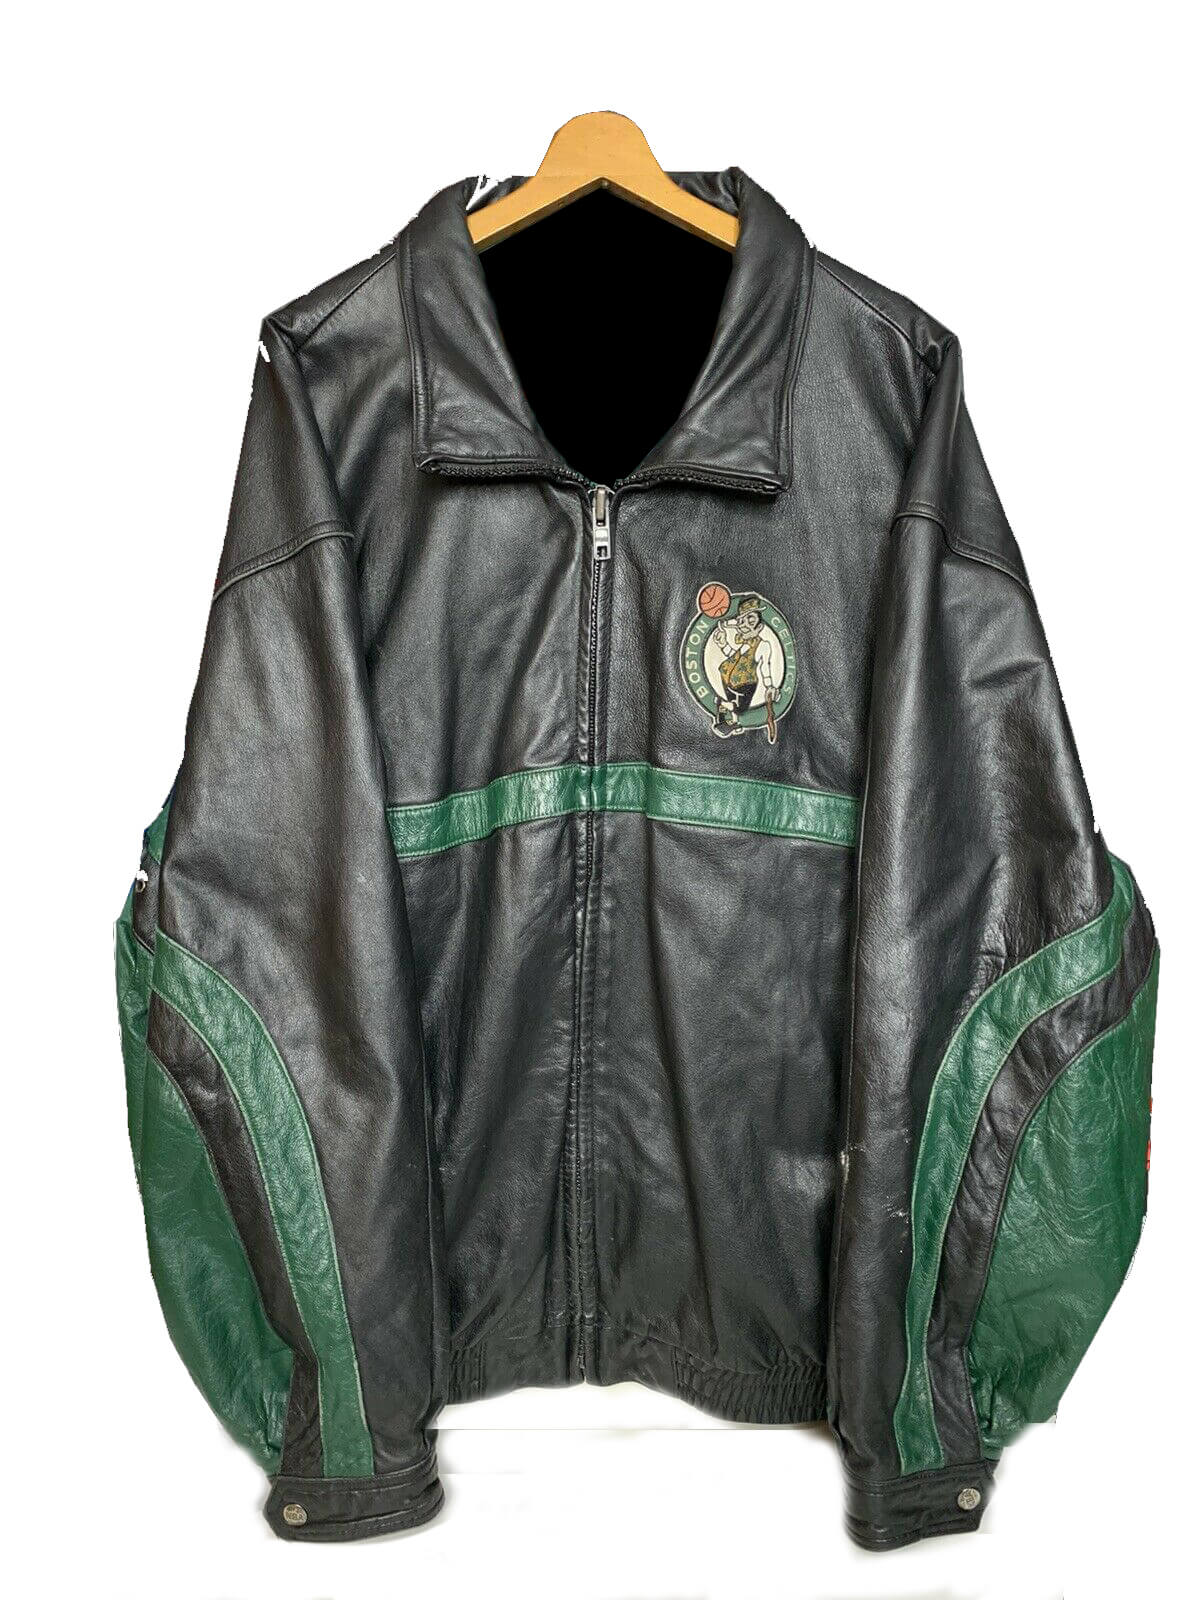 Boston Celtics NBA Black Leather Jacket - Maker of Jacket